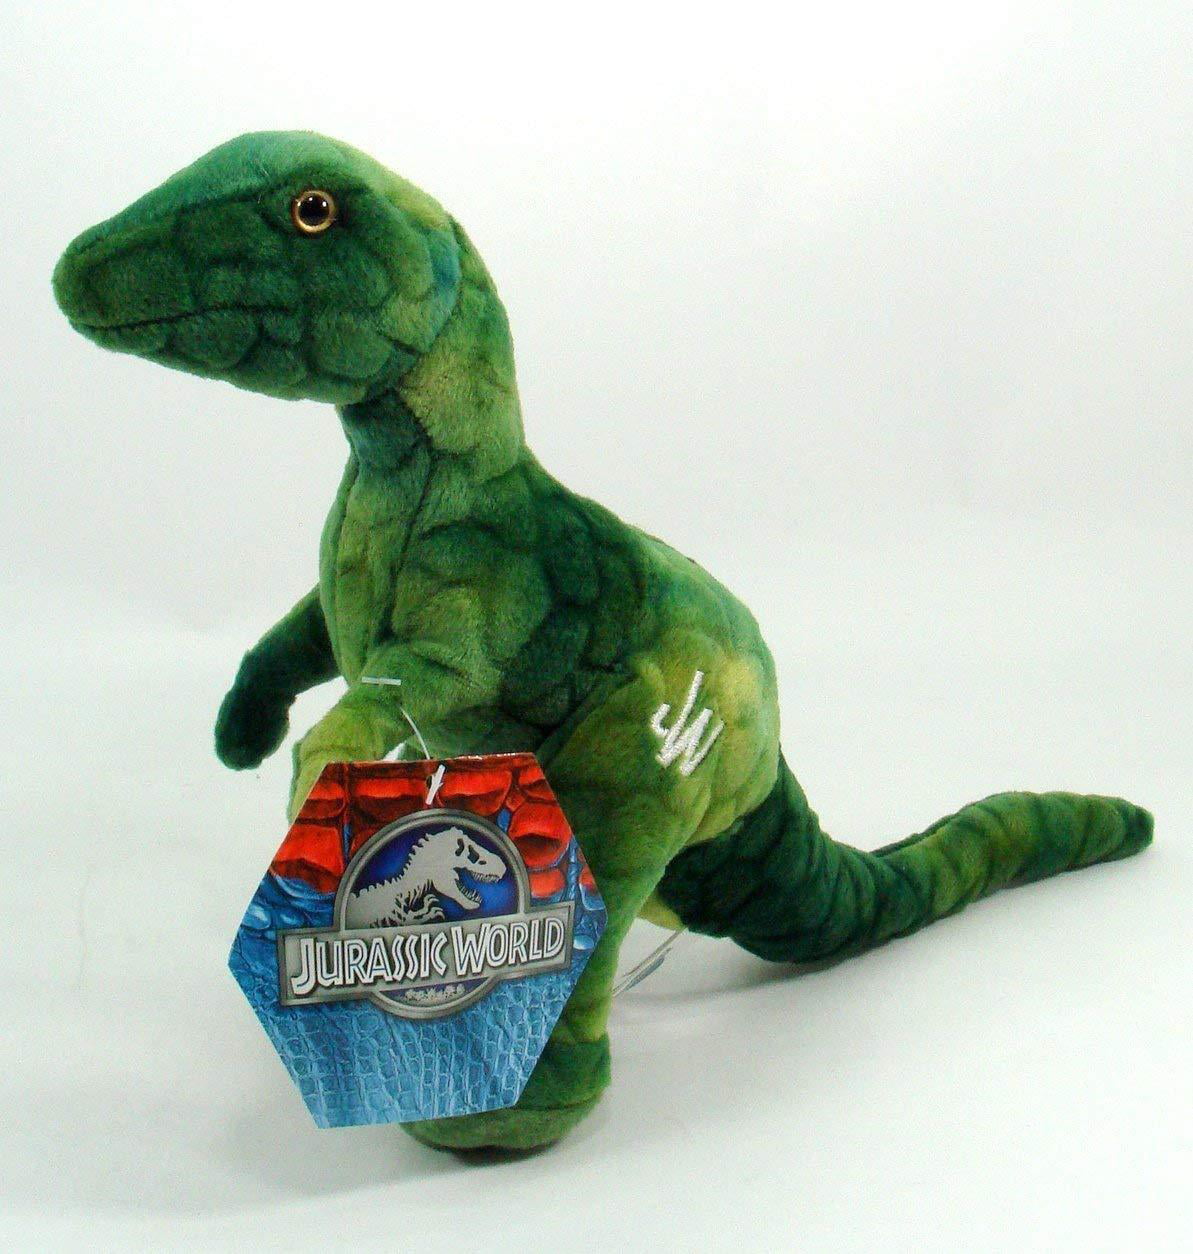 Jurassic World 16" Dinosaur Plush Stuffed Animal-READ DESCRIPTION-BLACK-GREEN 